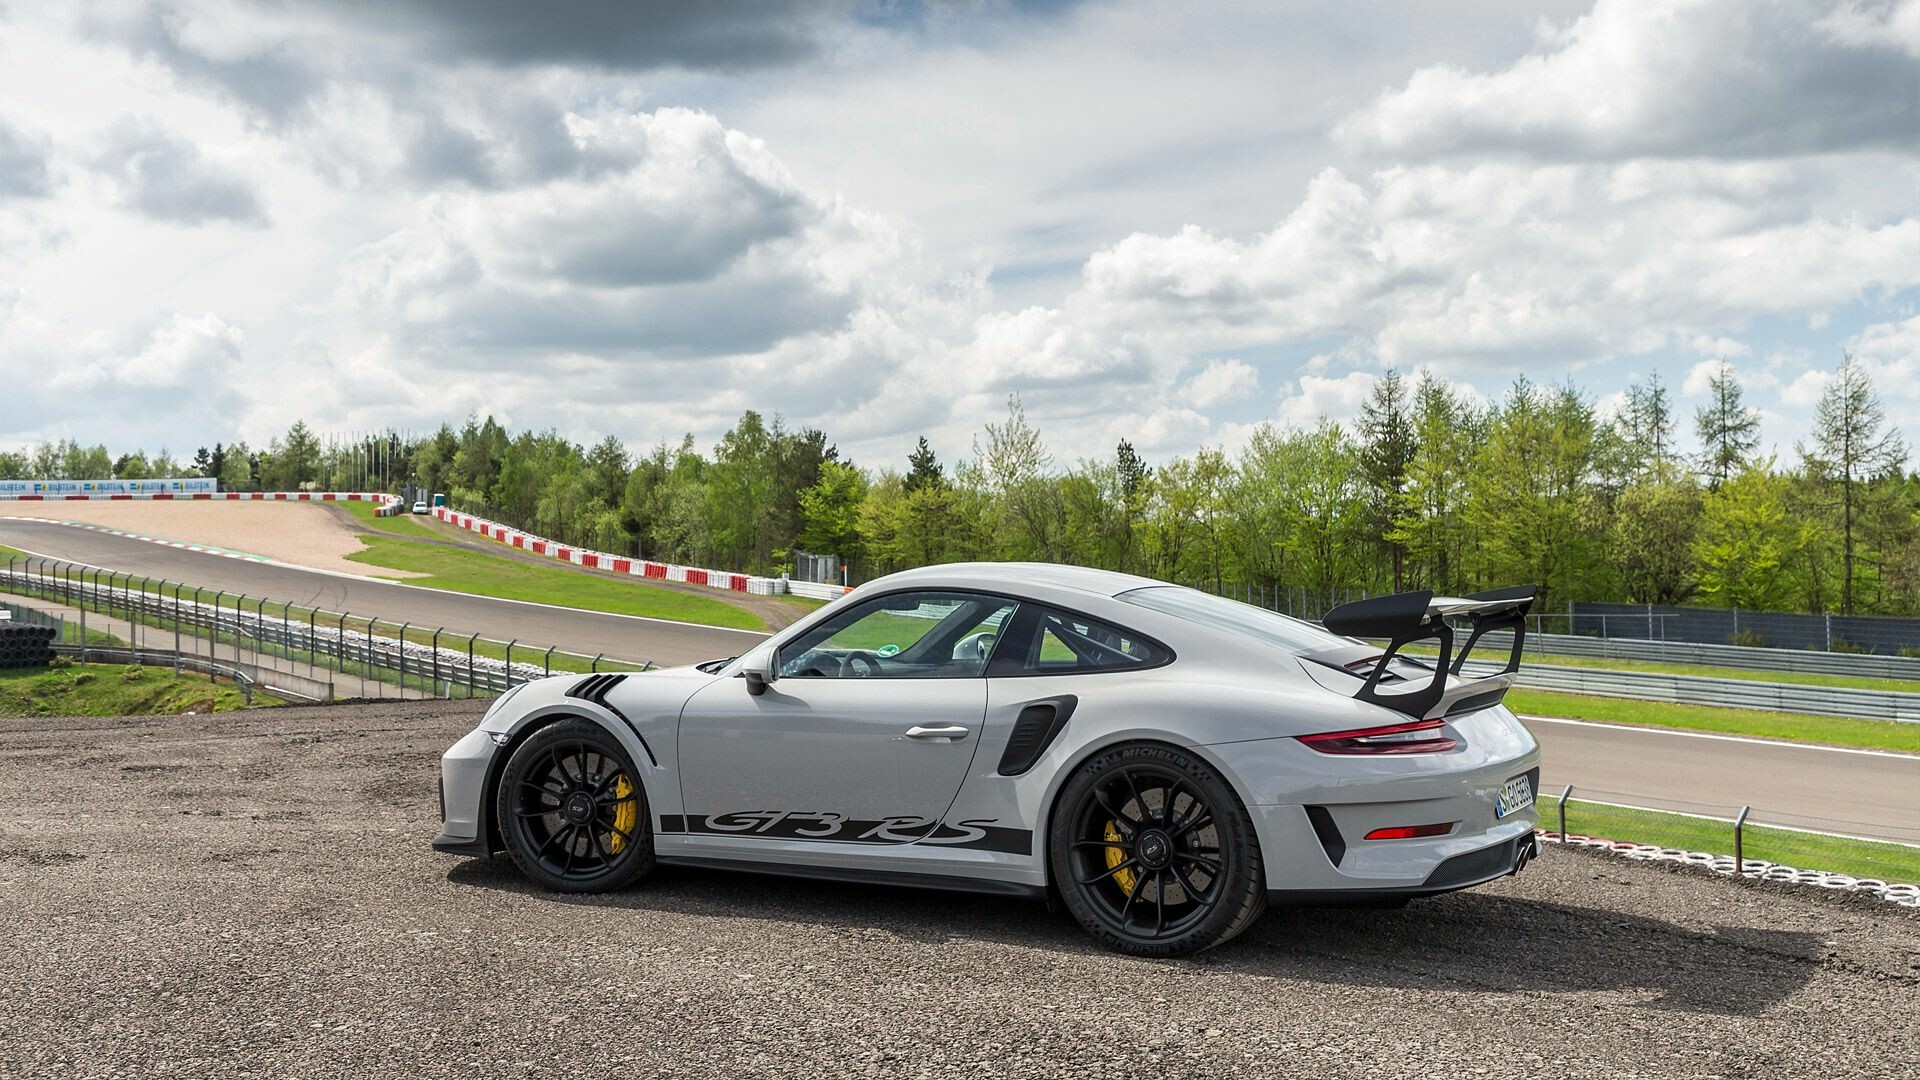 Porsche GT3 RS wallpapers, 4K HD, High-quality backgrounds, Free download, 1920x1080 Full HD Desktop